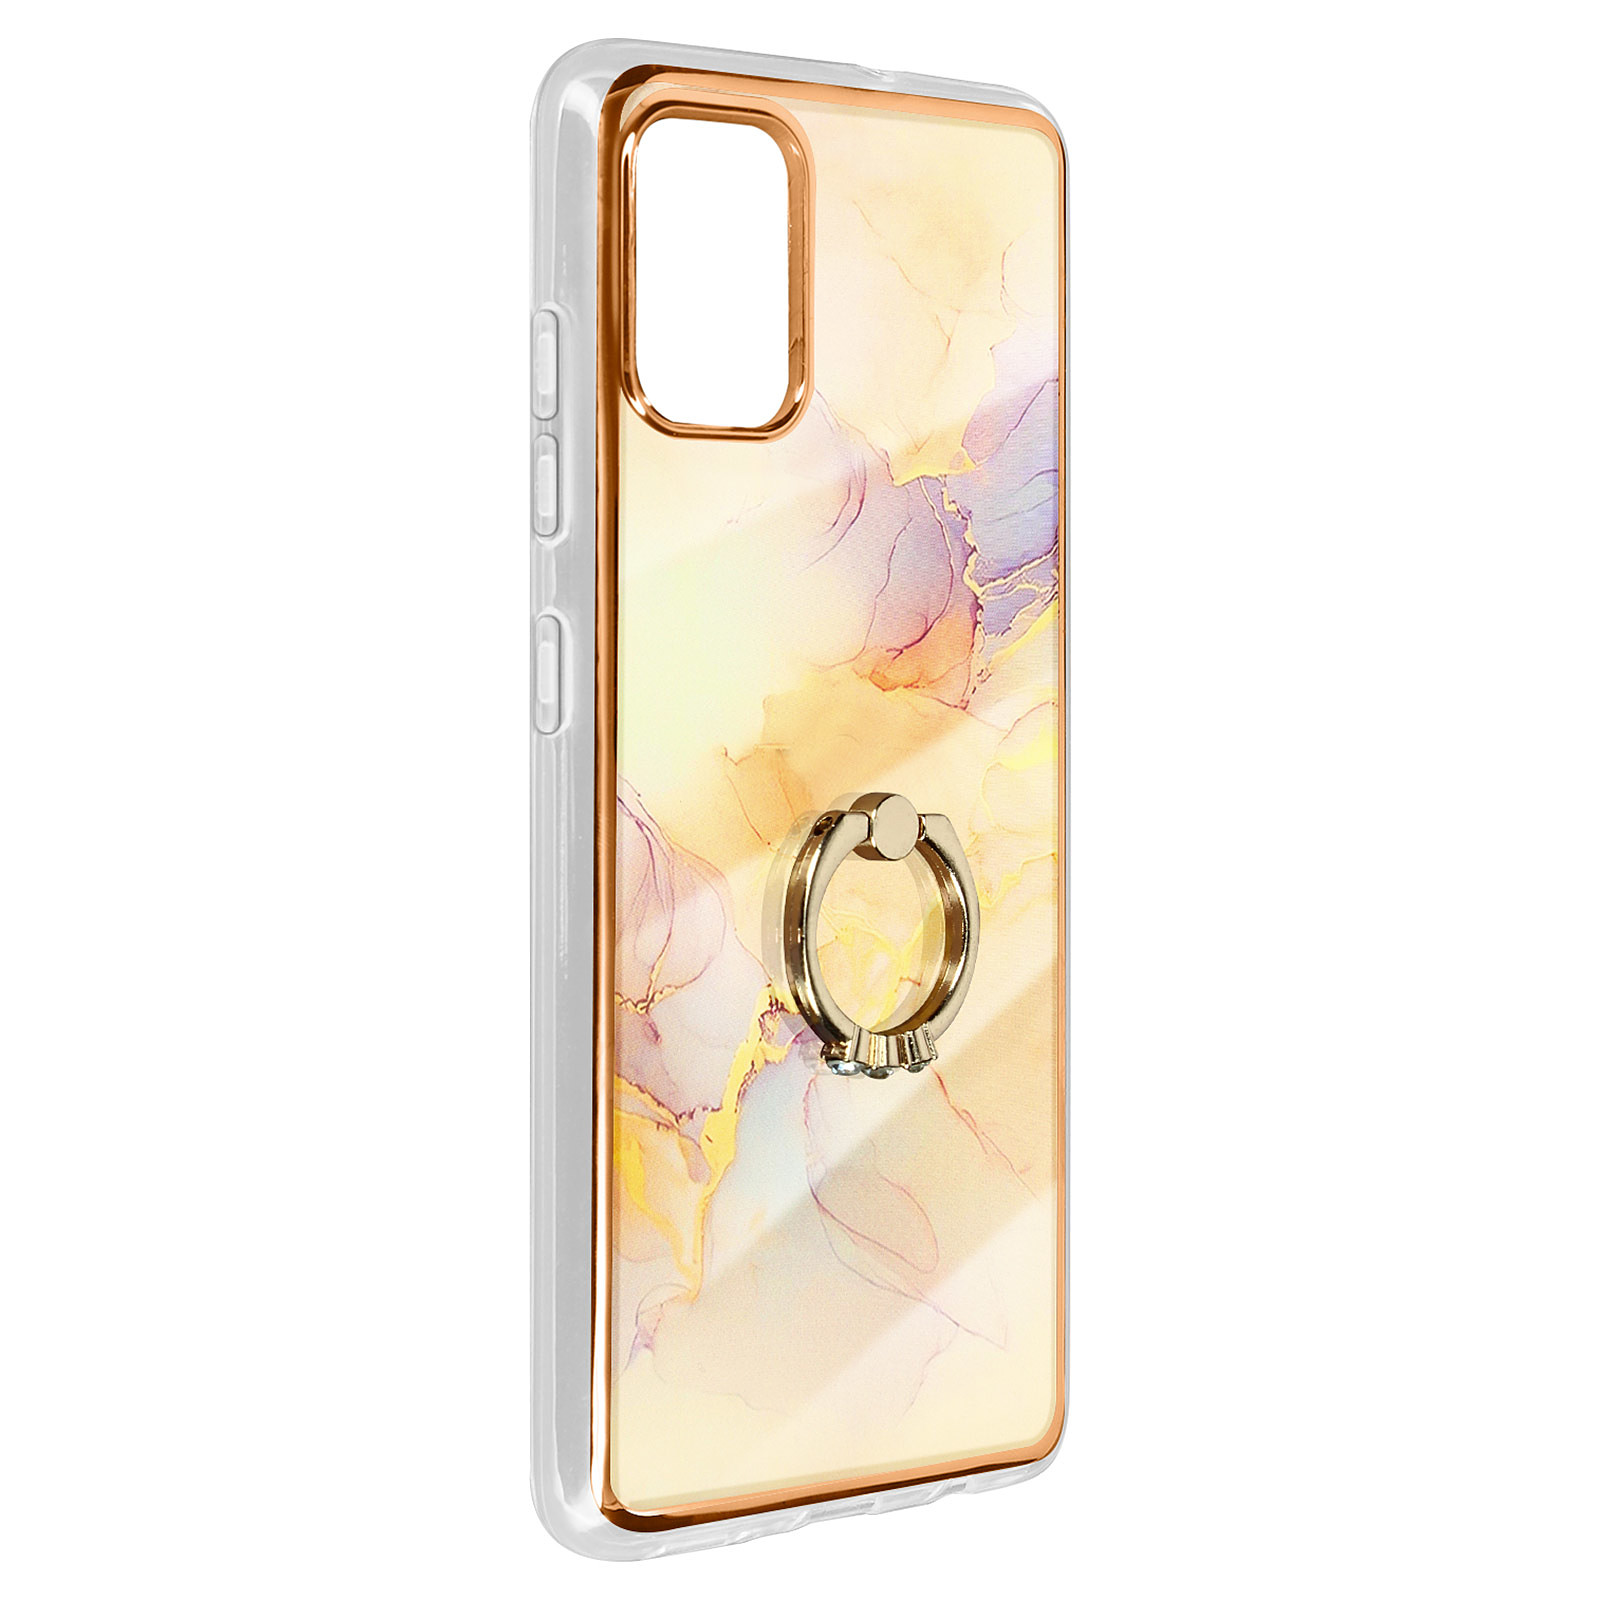 Avizar Coque pour Samsung Galaxy A51 Bi-matière avec Bague de maintien a  strass effet bijou Motif marbre champagne - Coque telephone Avizar